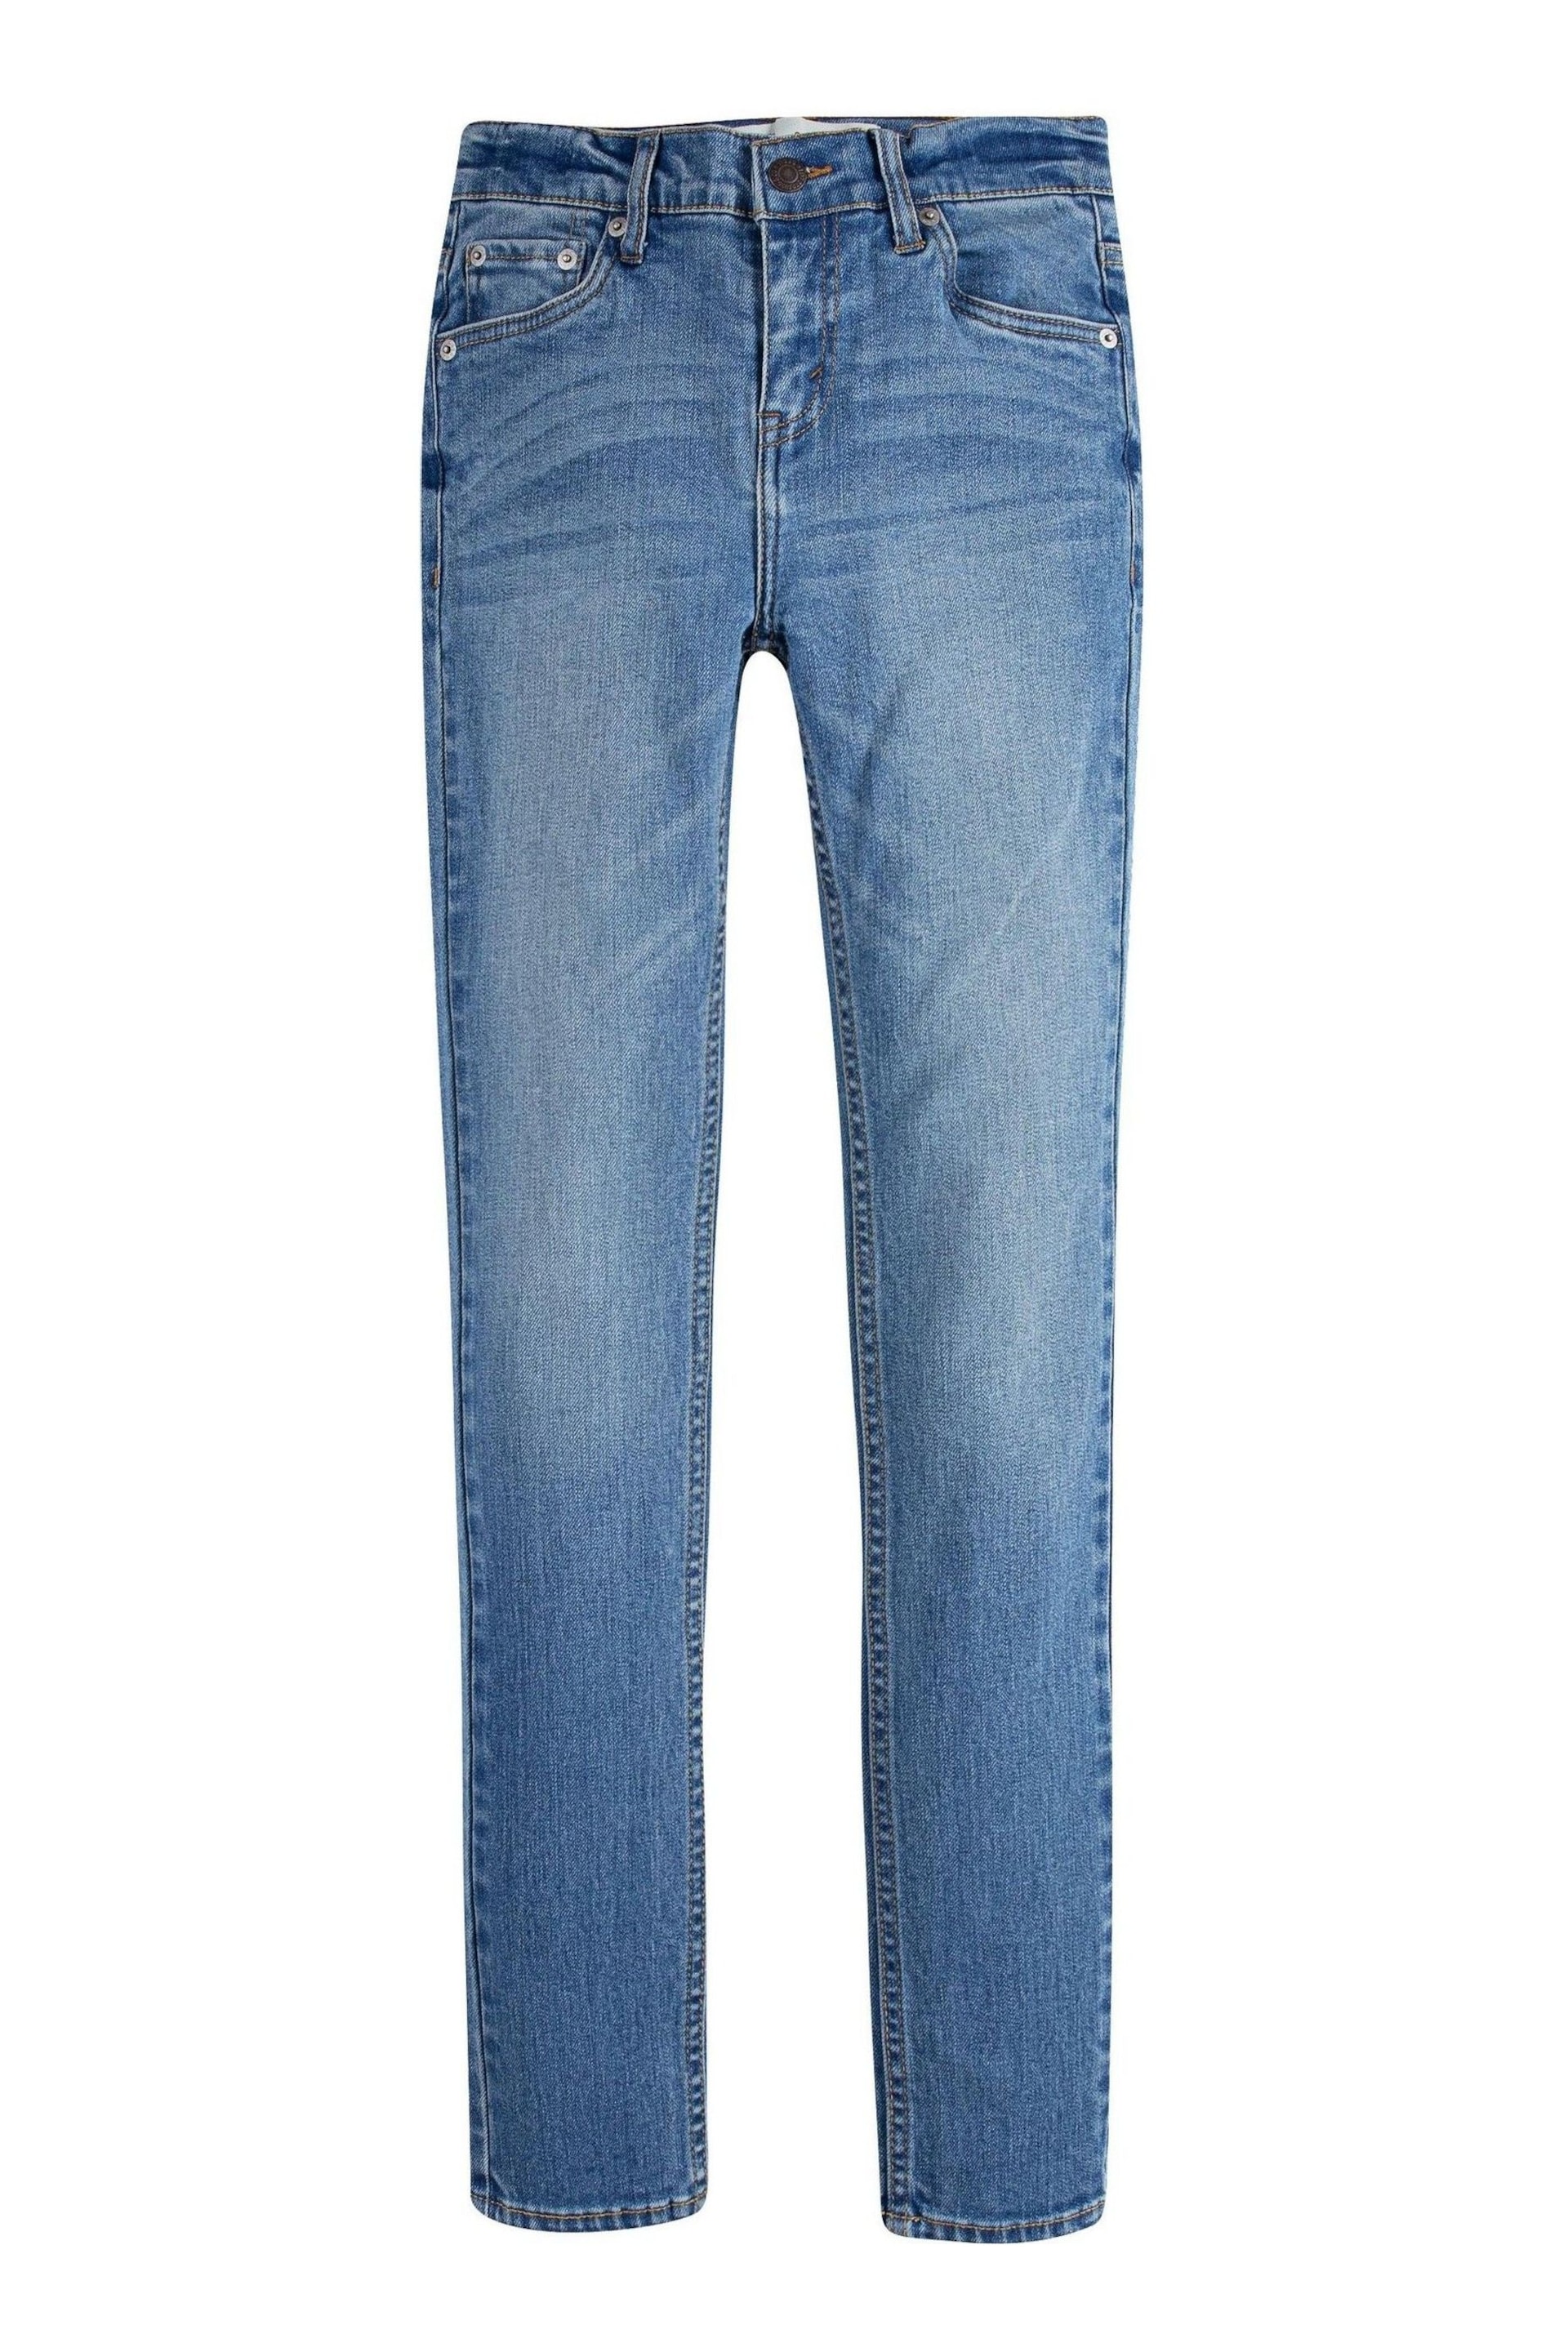 Levi's® Blue Skinny Tapered Denim Jeans - Image 3 of 4